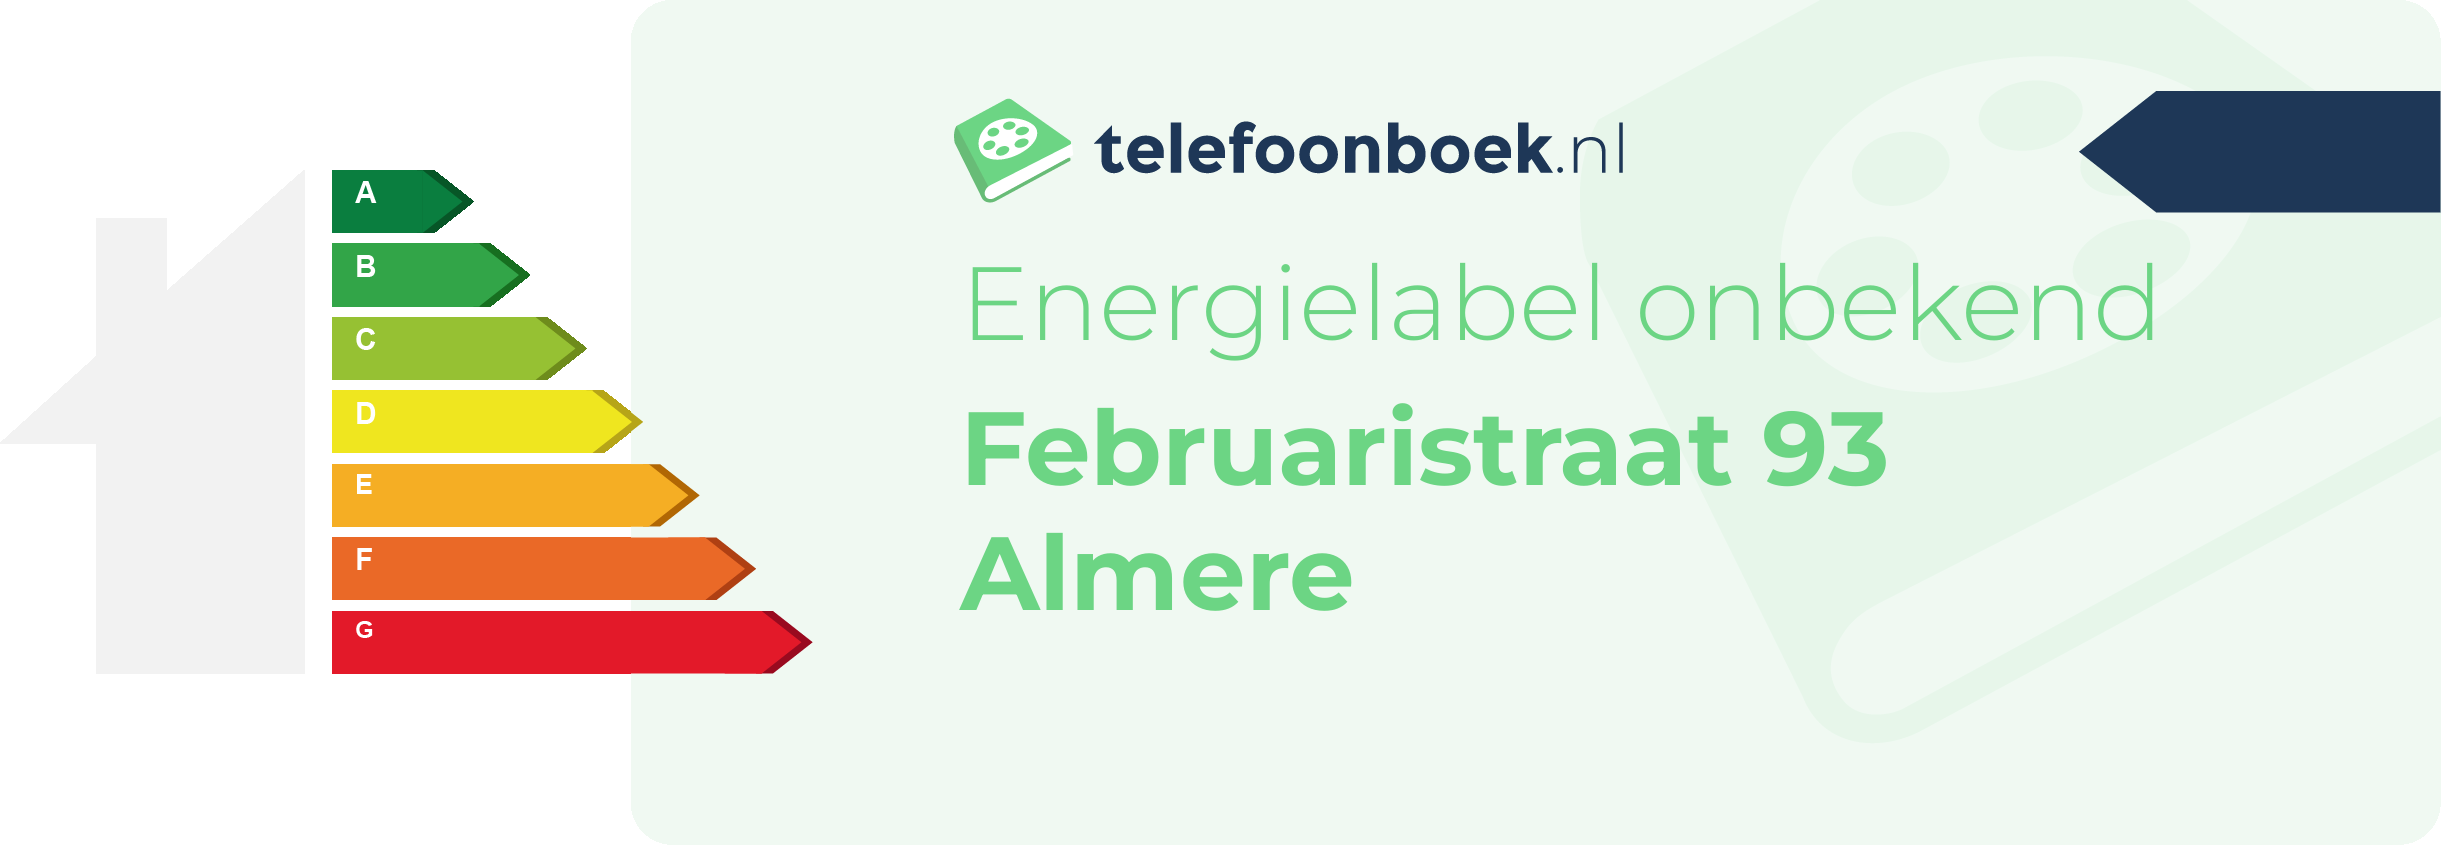 Energielabel Februaristraat 93 Almere